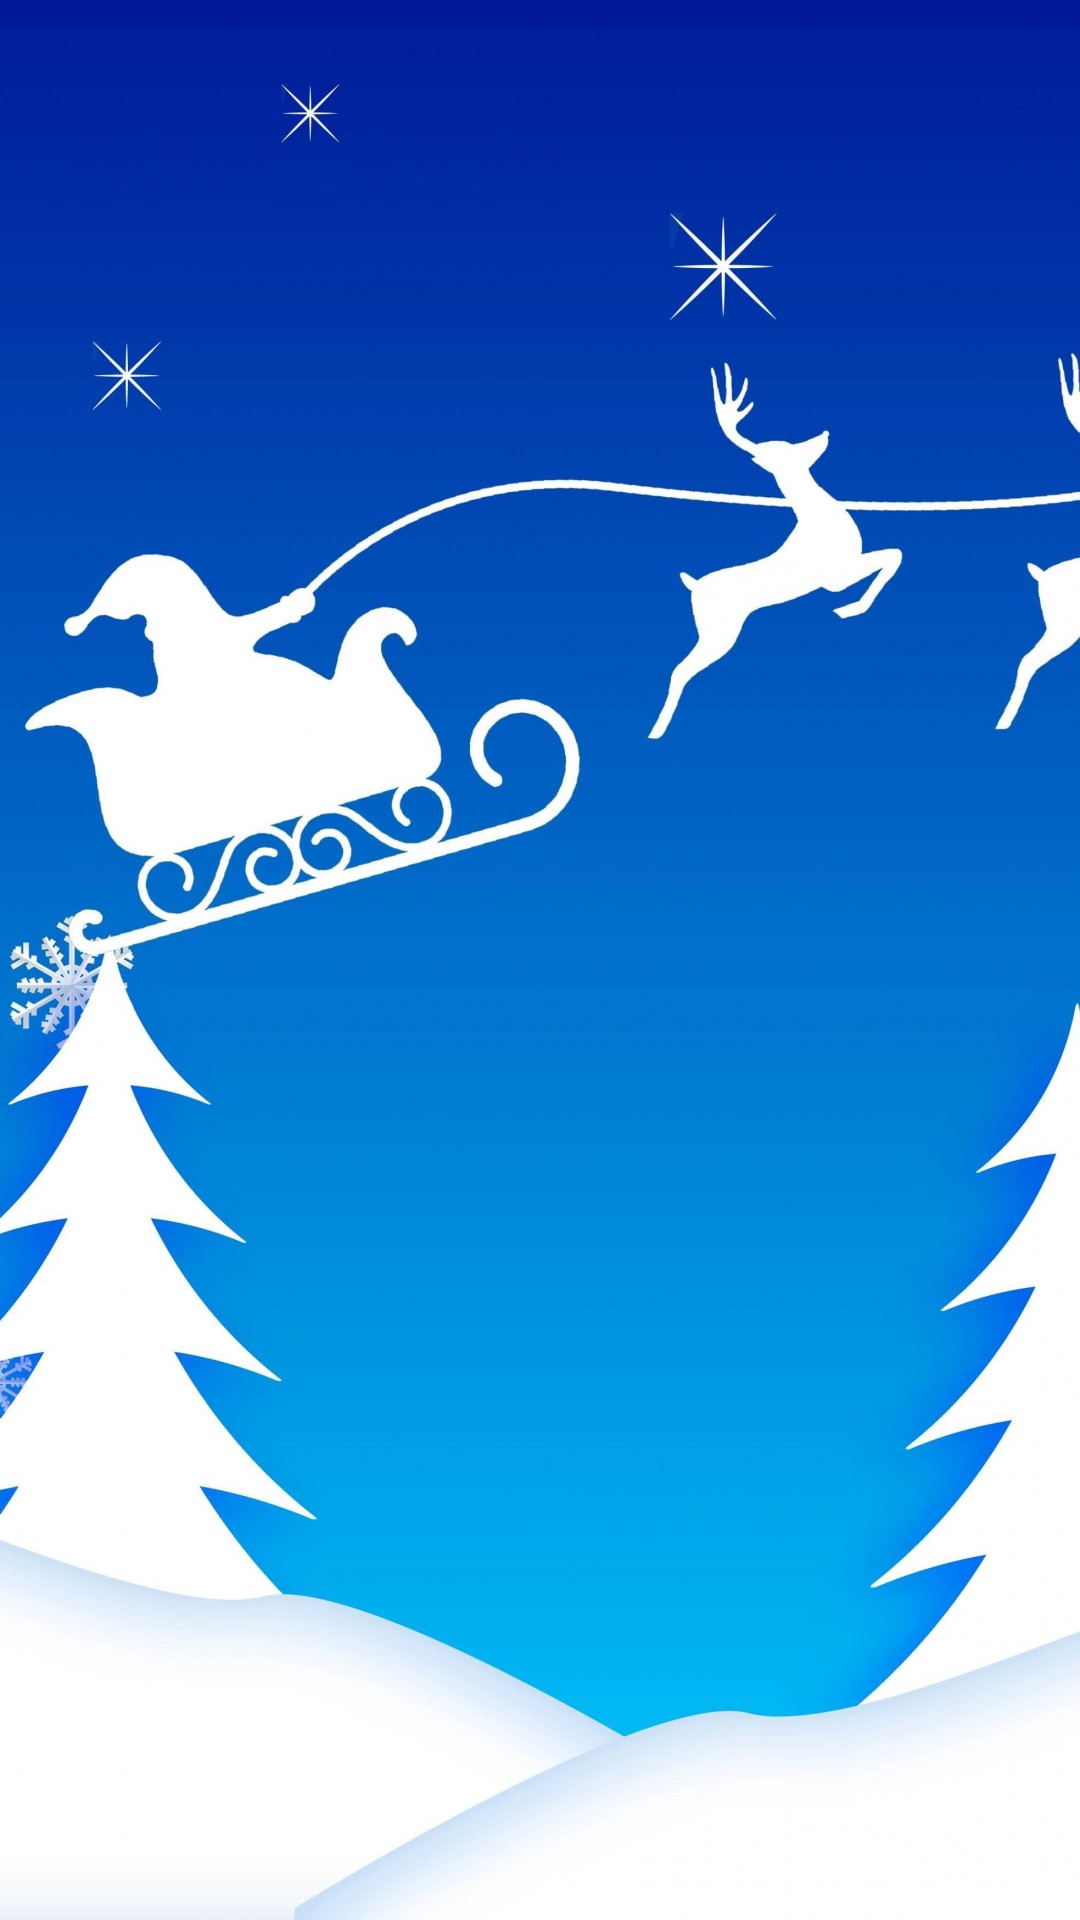 Santa’s Sleigh Illustration Wallpaper for SAMSUNG Galaxy S5